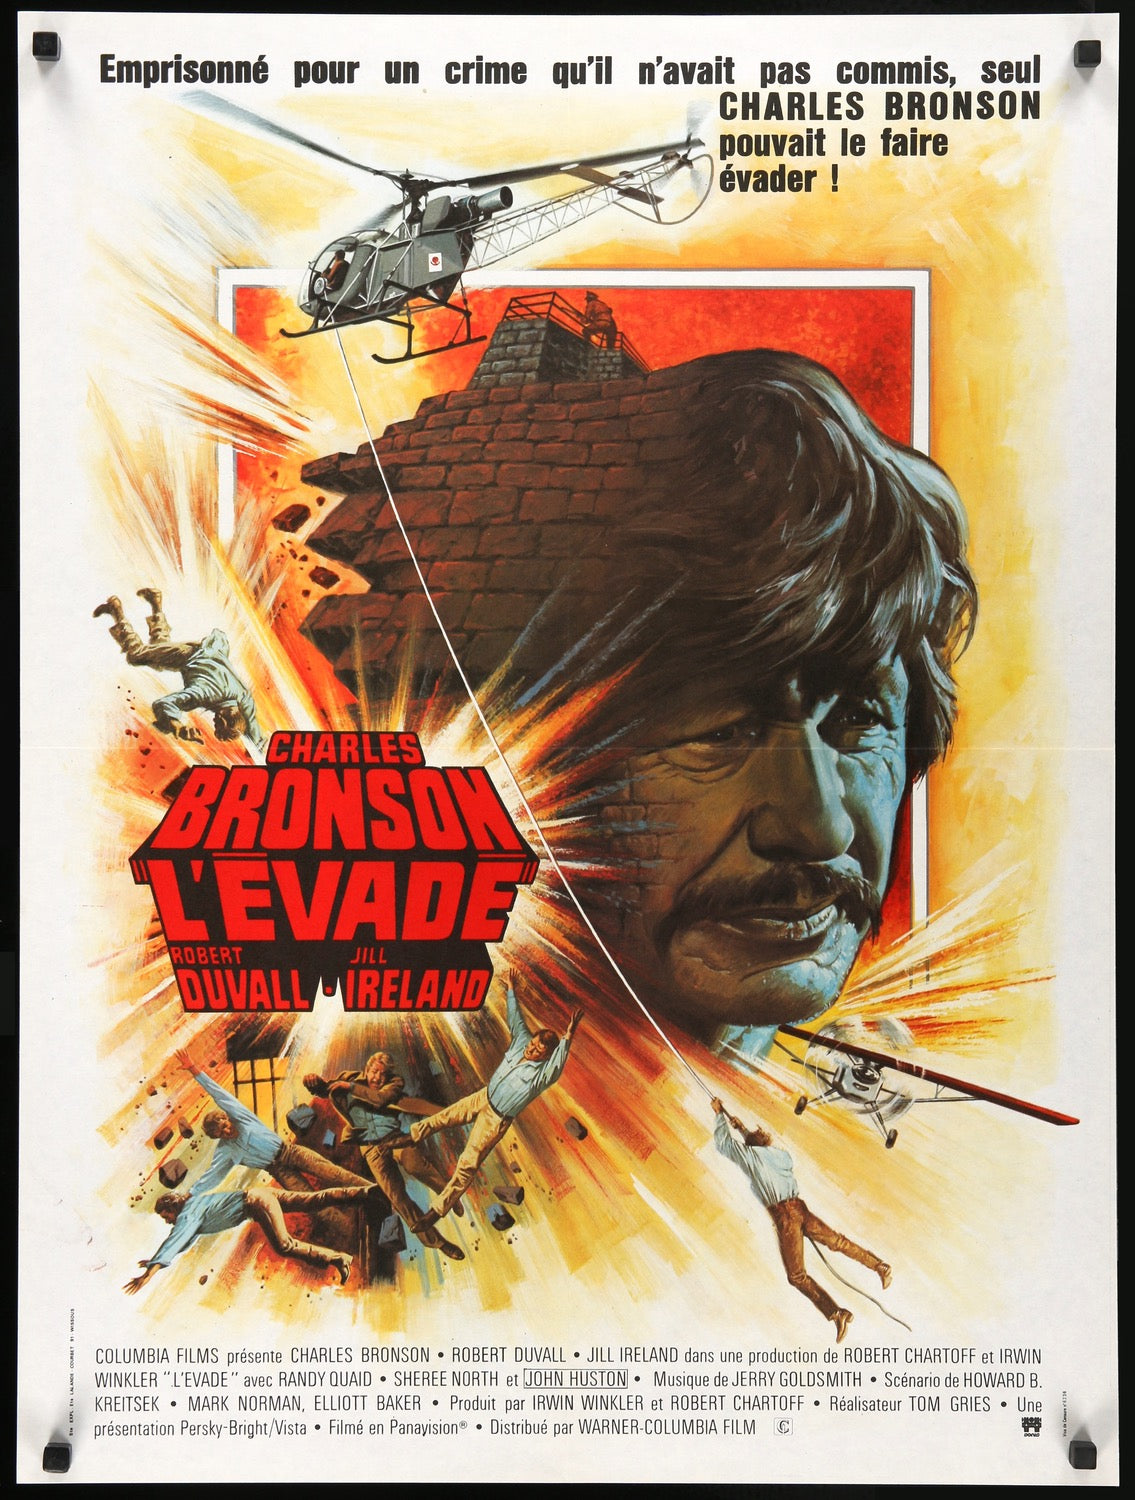 Breakout (1975) original movie poster for sale at Original Film Art